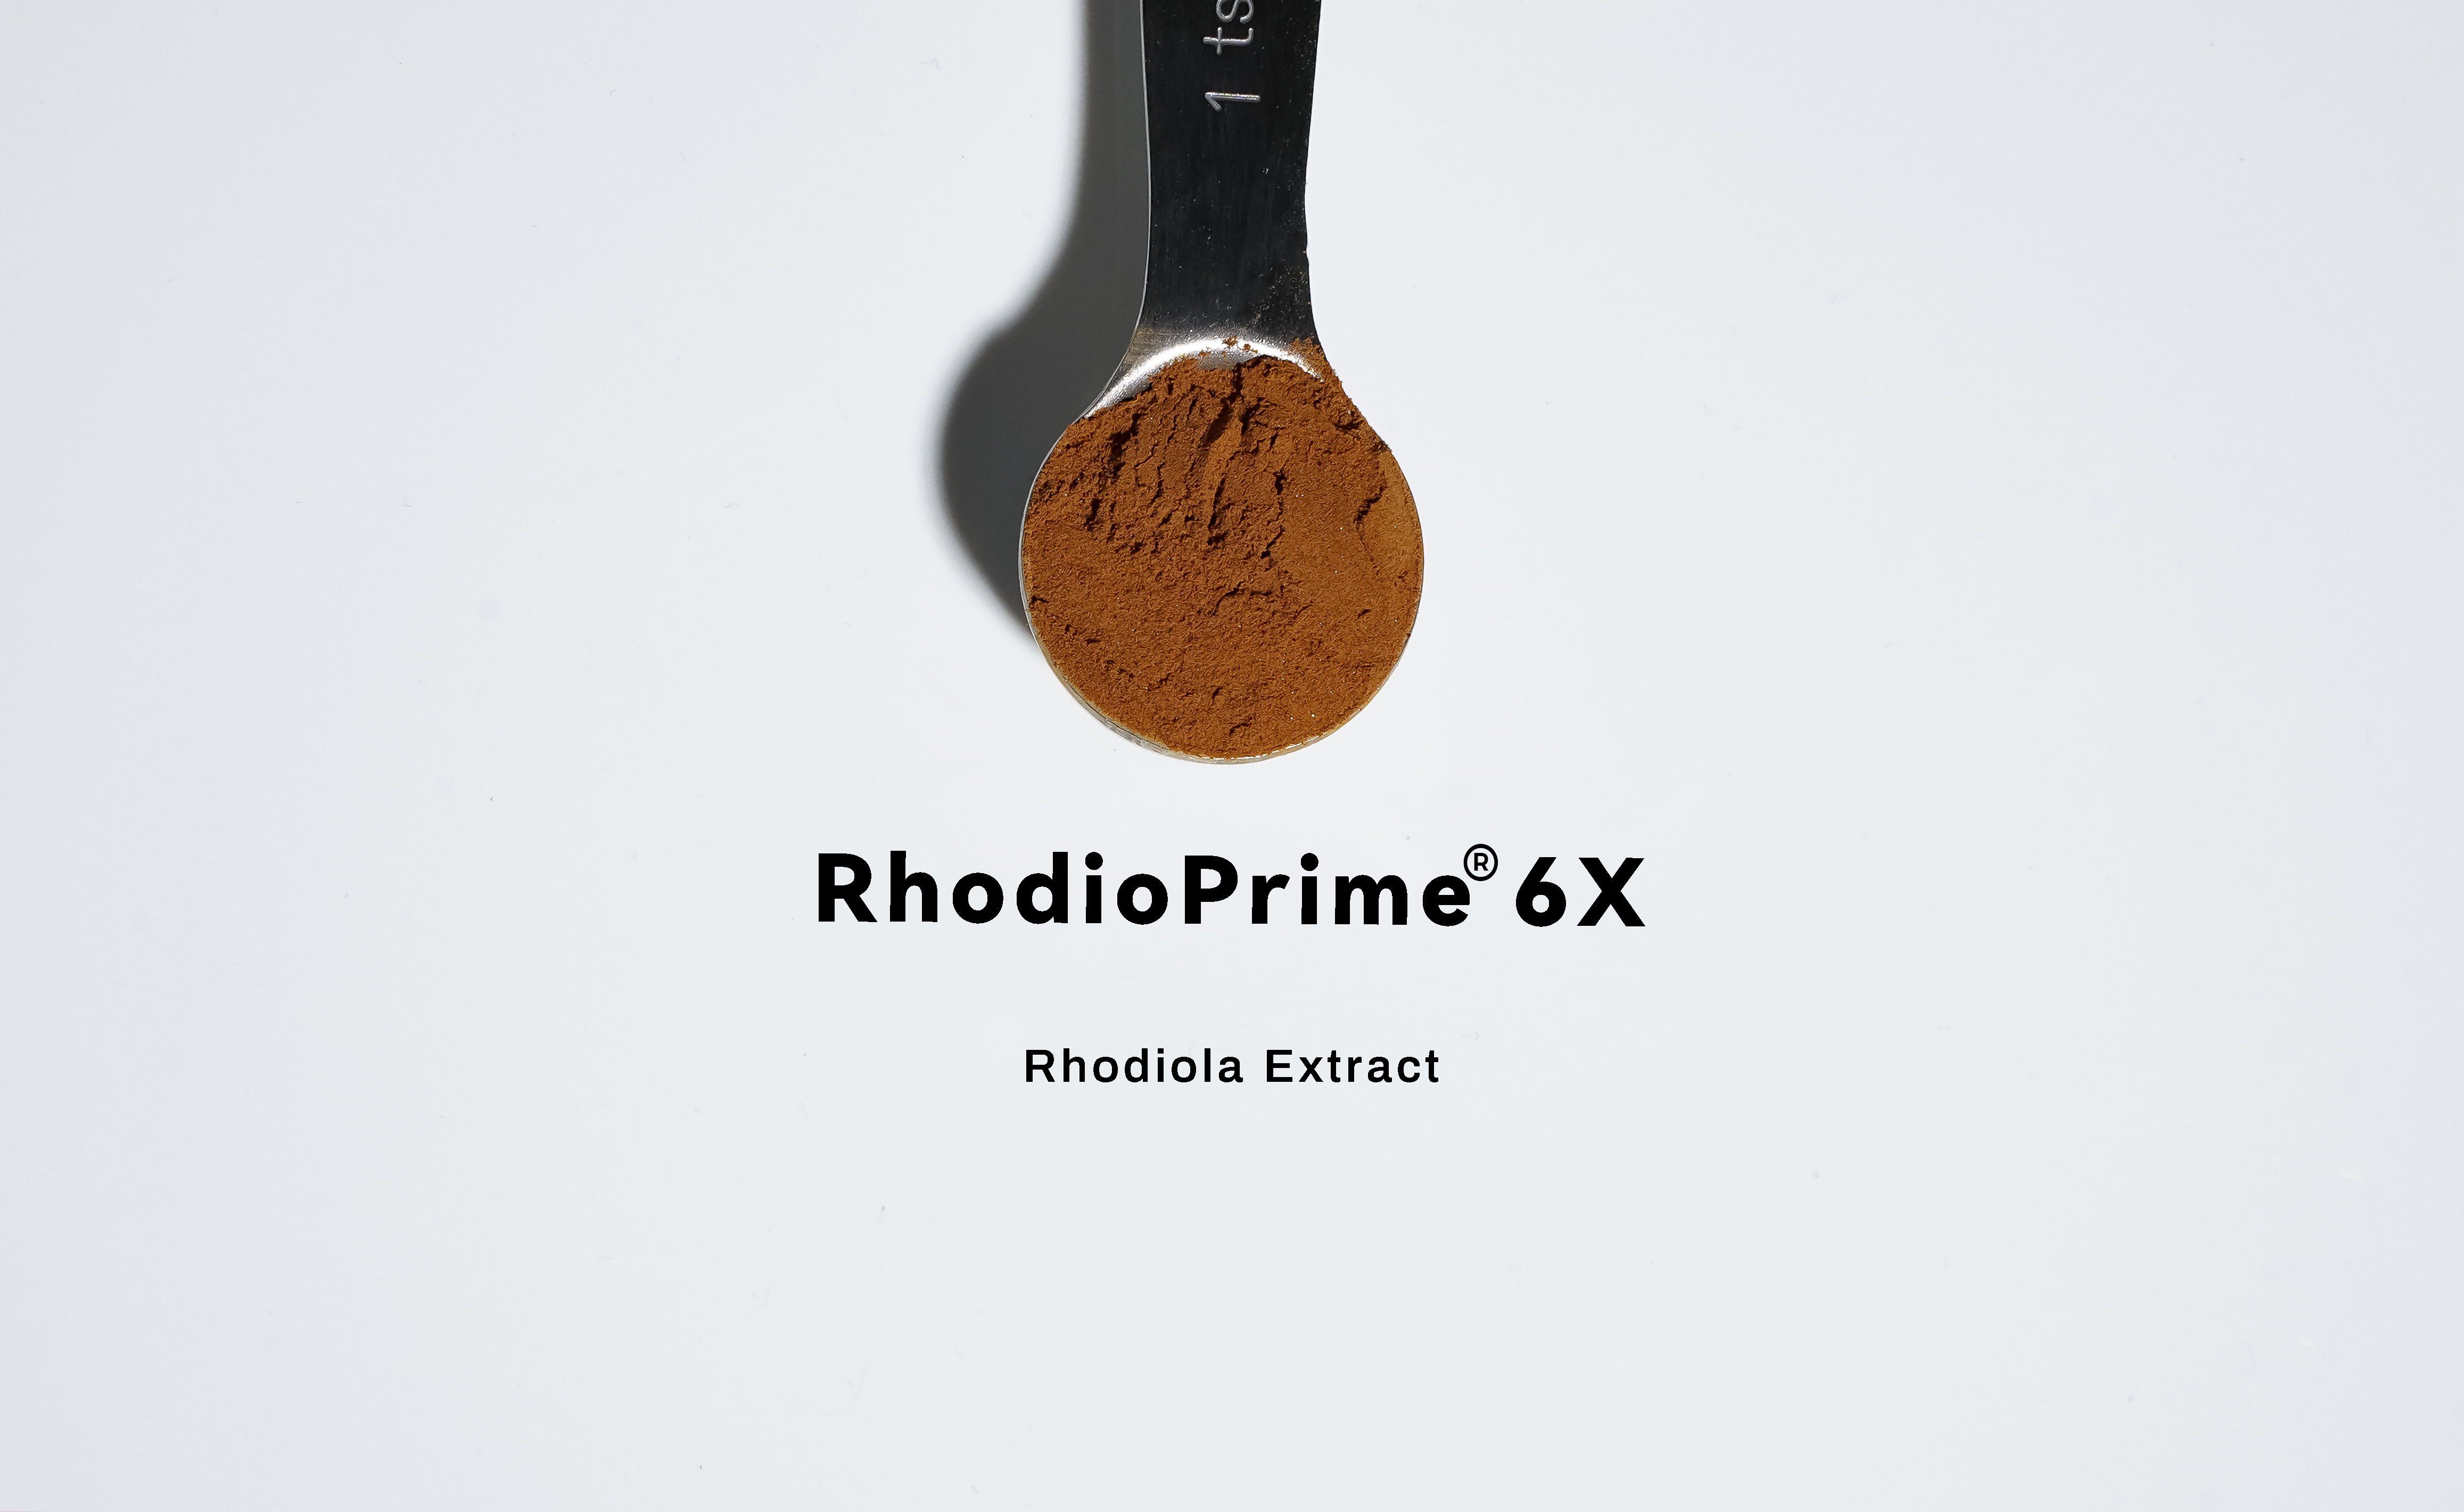 RhodioPrime®6X - Ingredient Description